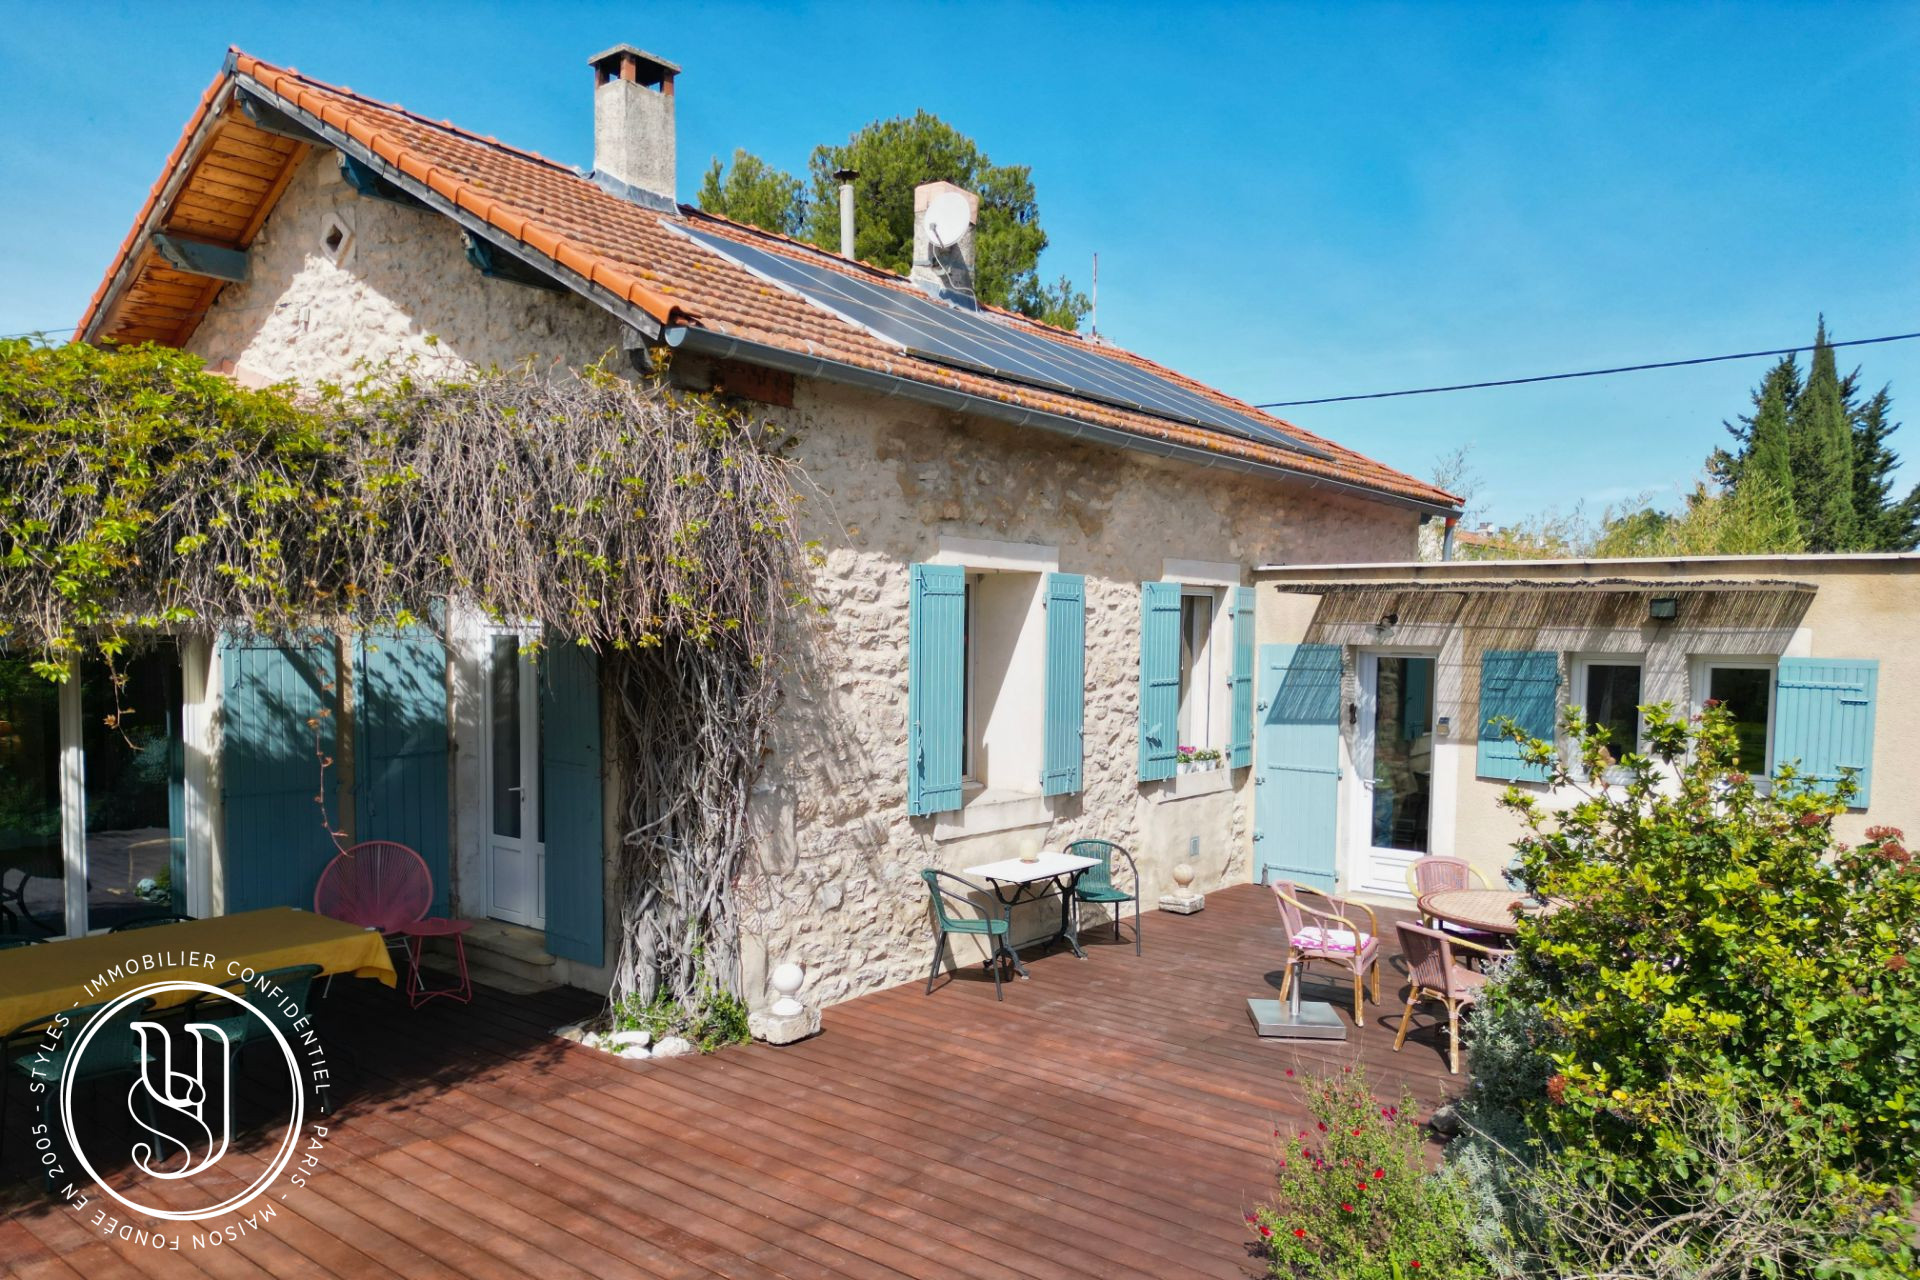 Saint-Rémy-de-Provence - centre on foot, a superb 50s house with its garden - image 3